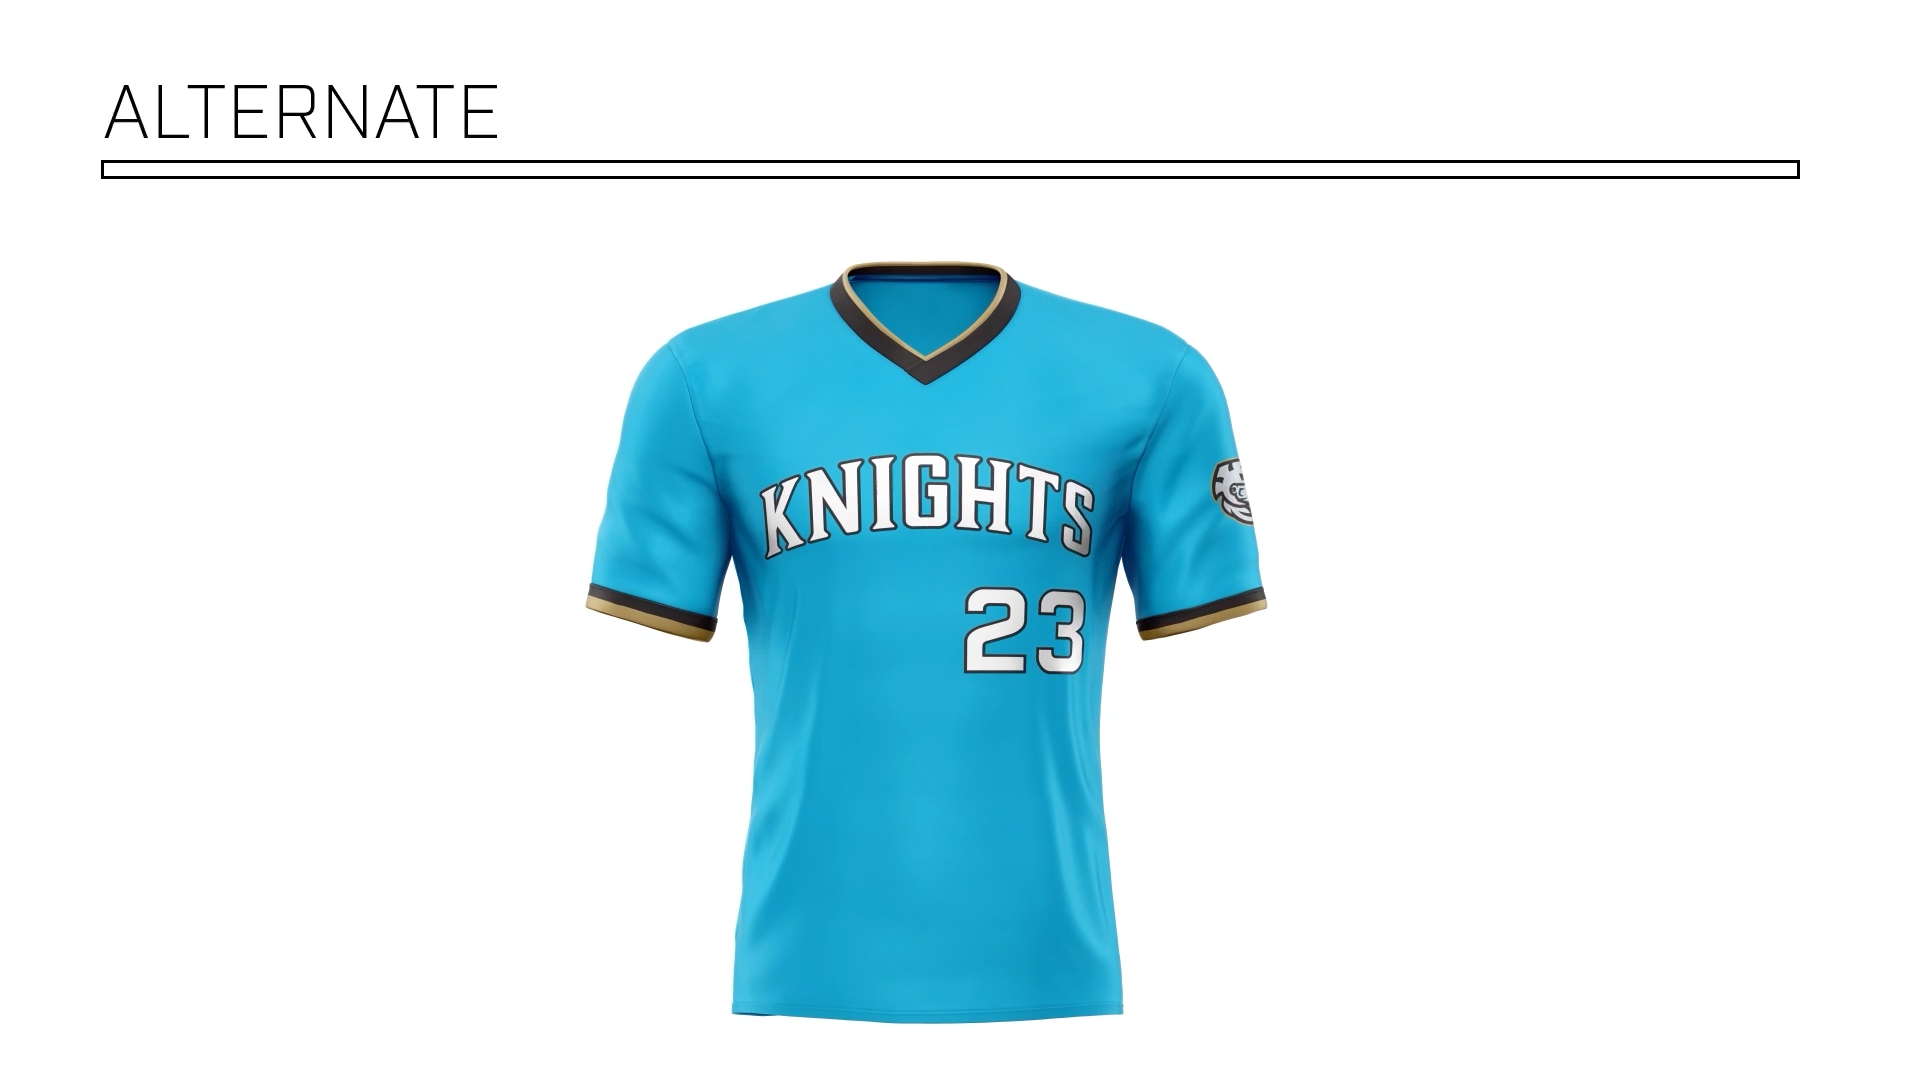 Charlotte Knights unveil new blue color scheme for logos, uniforms – WSOC TV